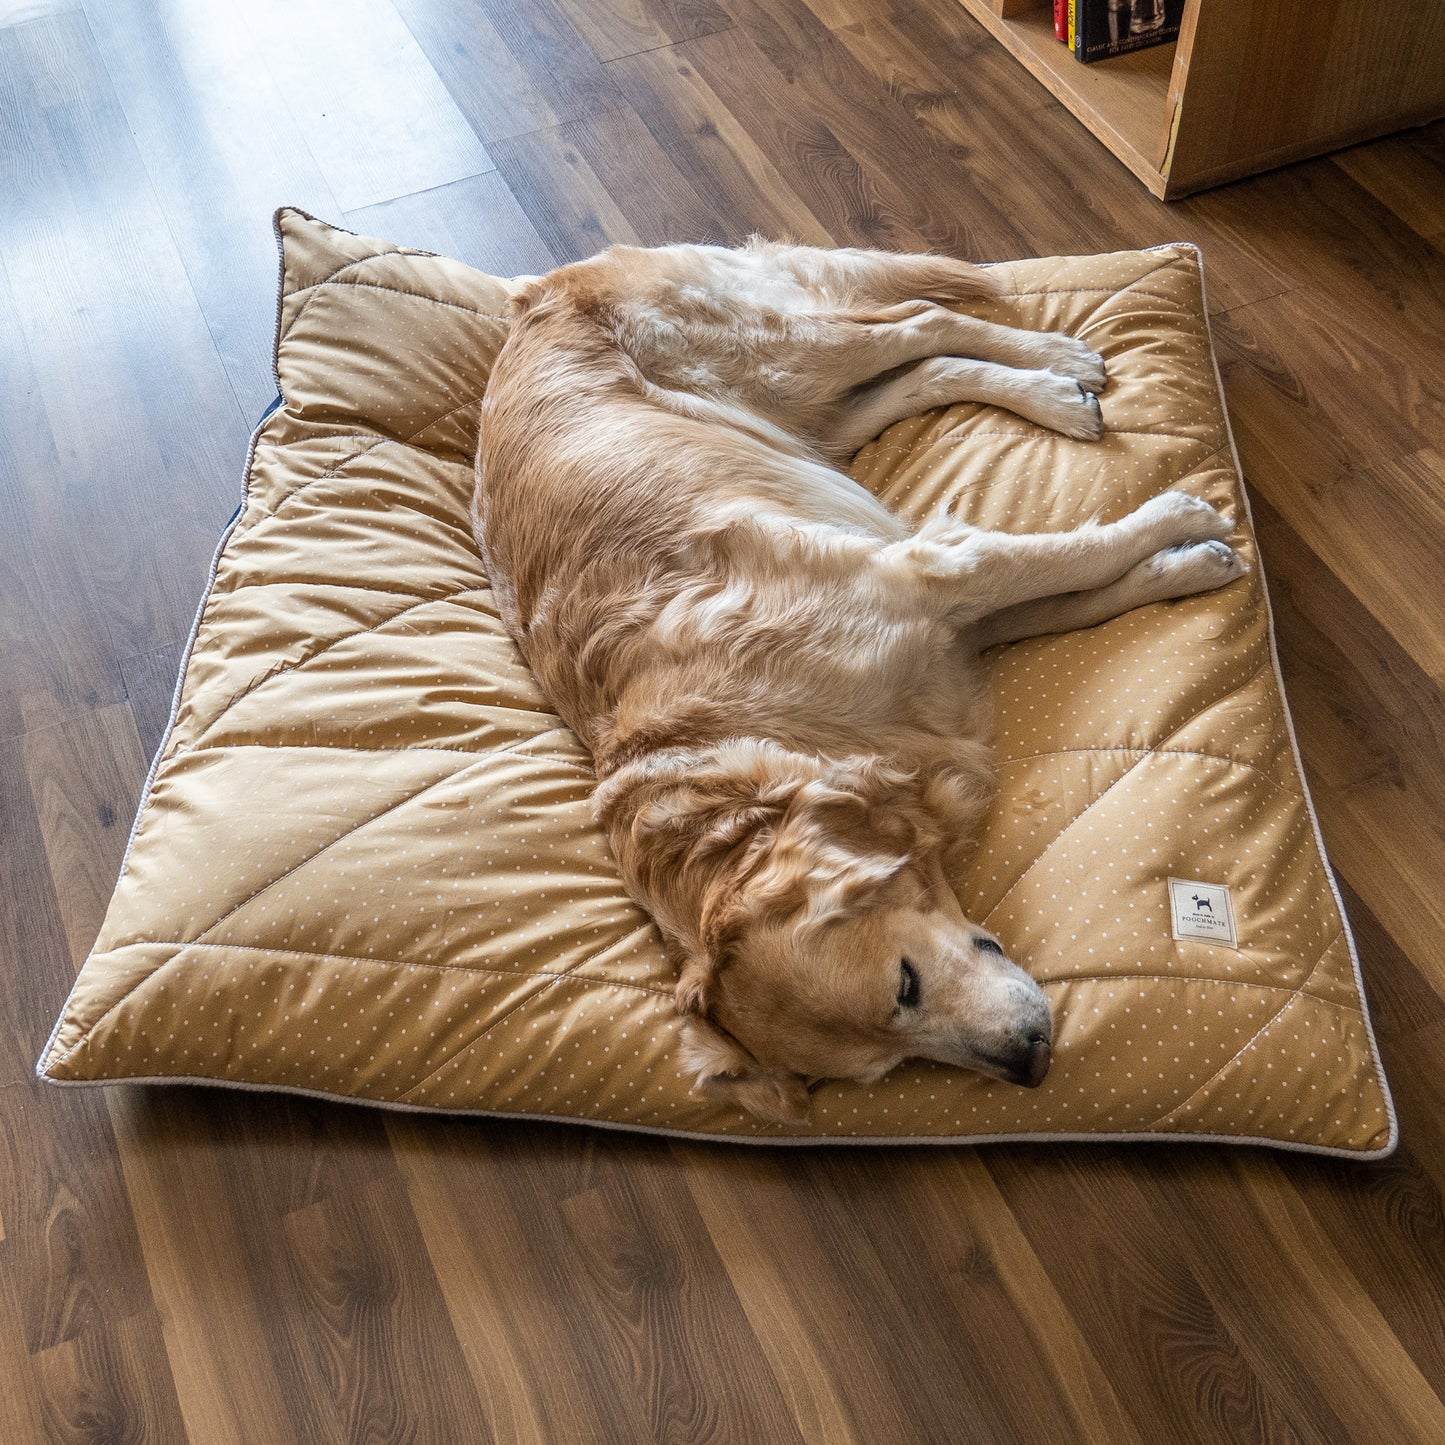 Beds for Labrador | large dog beds India